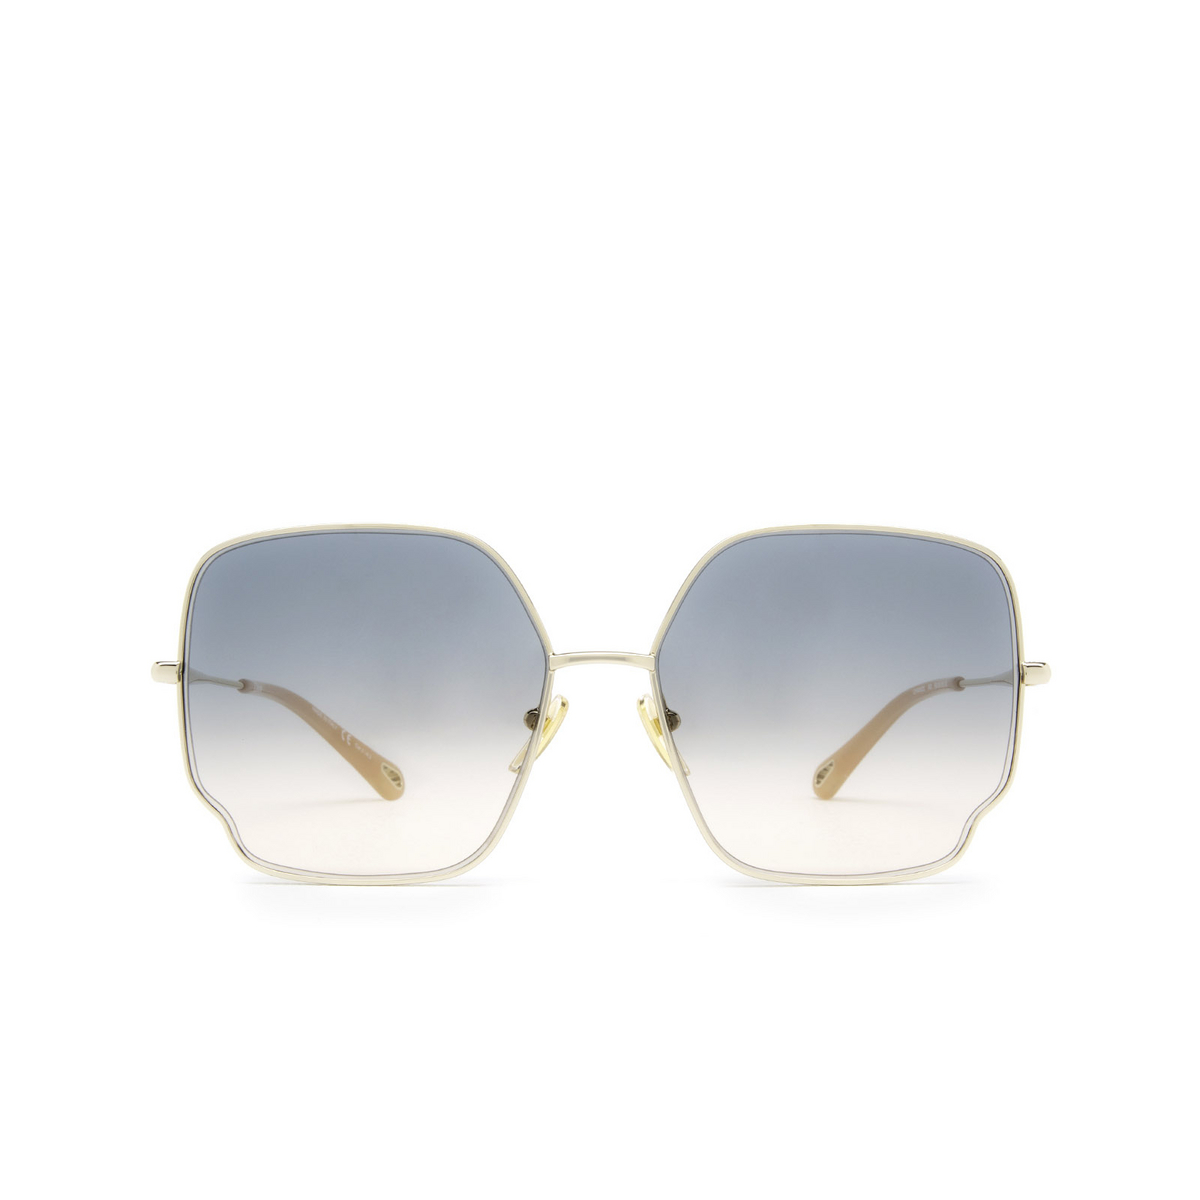 Chloé® Square Sunglasses: CH0092S color Gold 003 - front view.